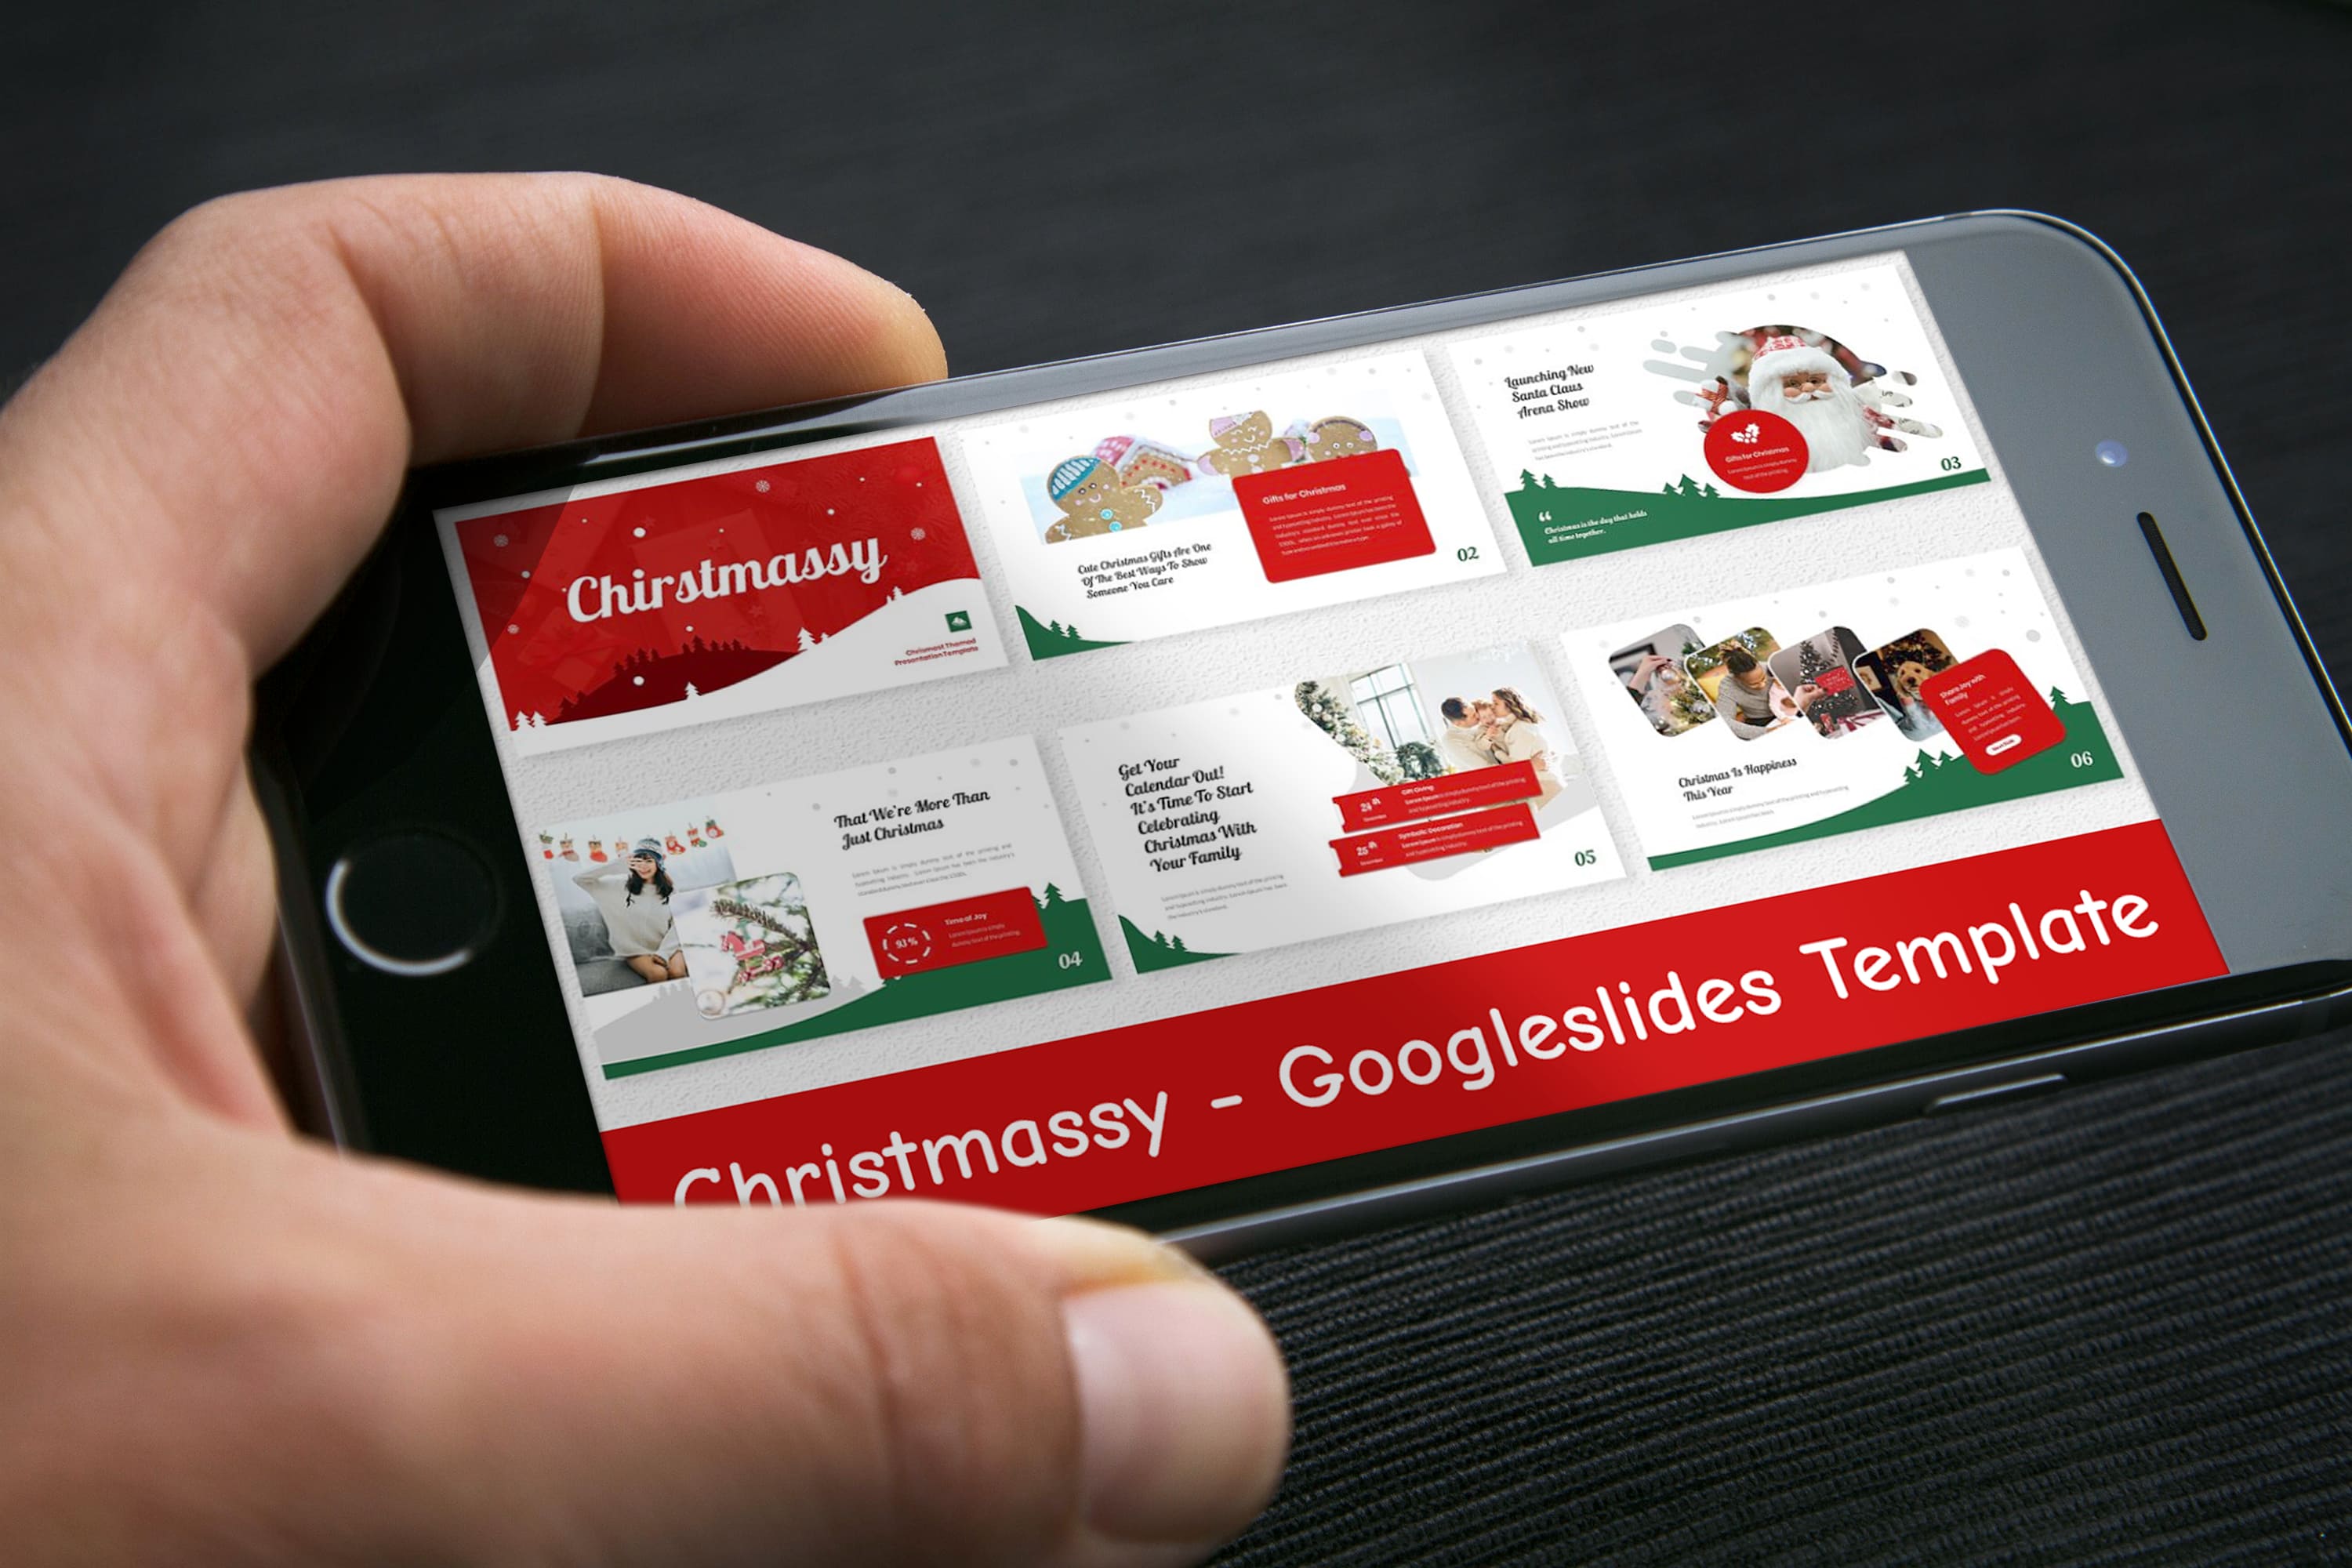 Christmassy - Googleslides Template - Mockup on Smartphone.